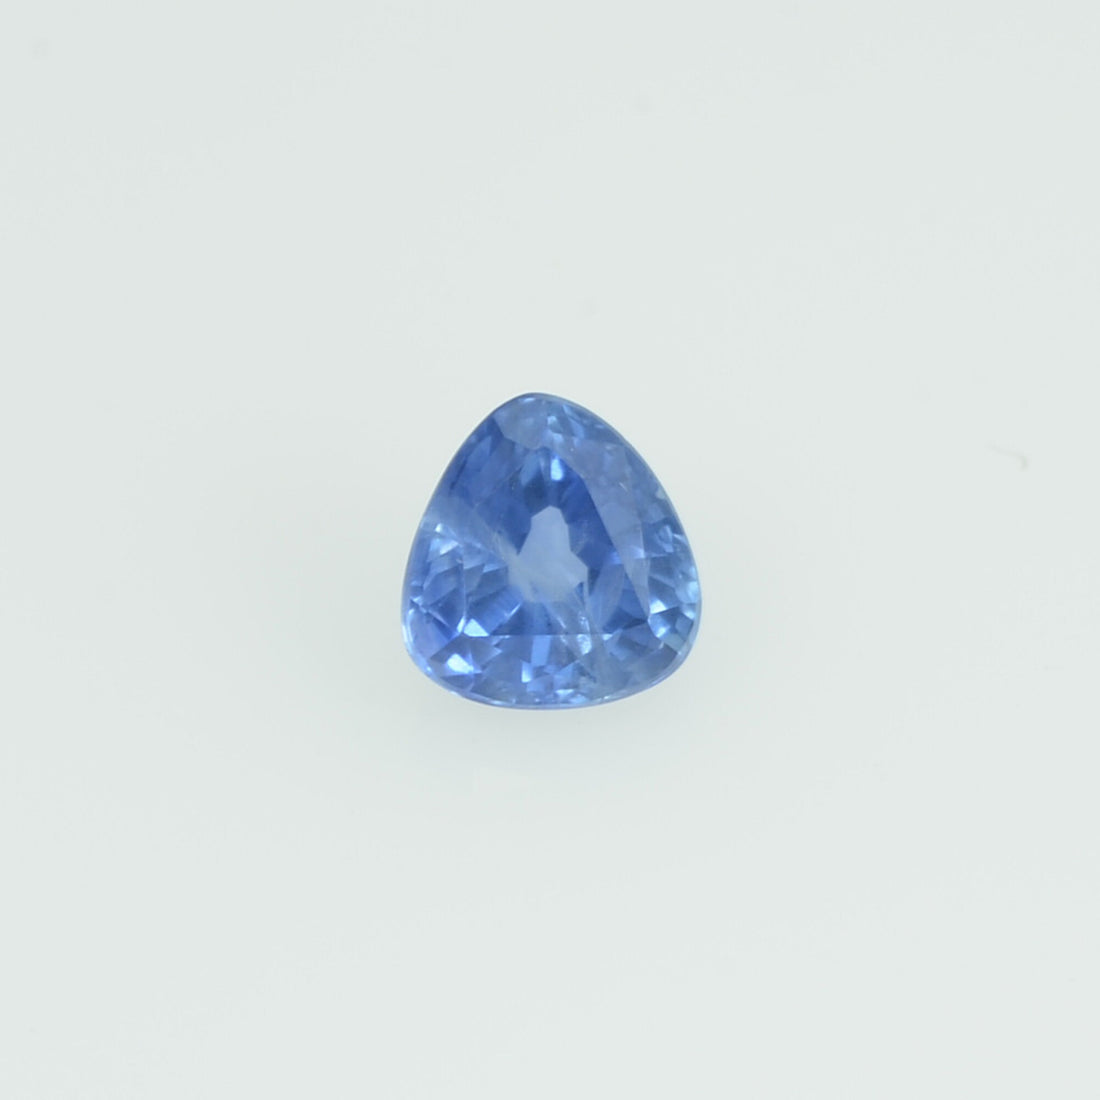 0.13 Cts Natural Blue Sapphire Loose Gemstone Fancy Trillion Cut